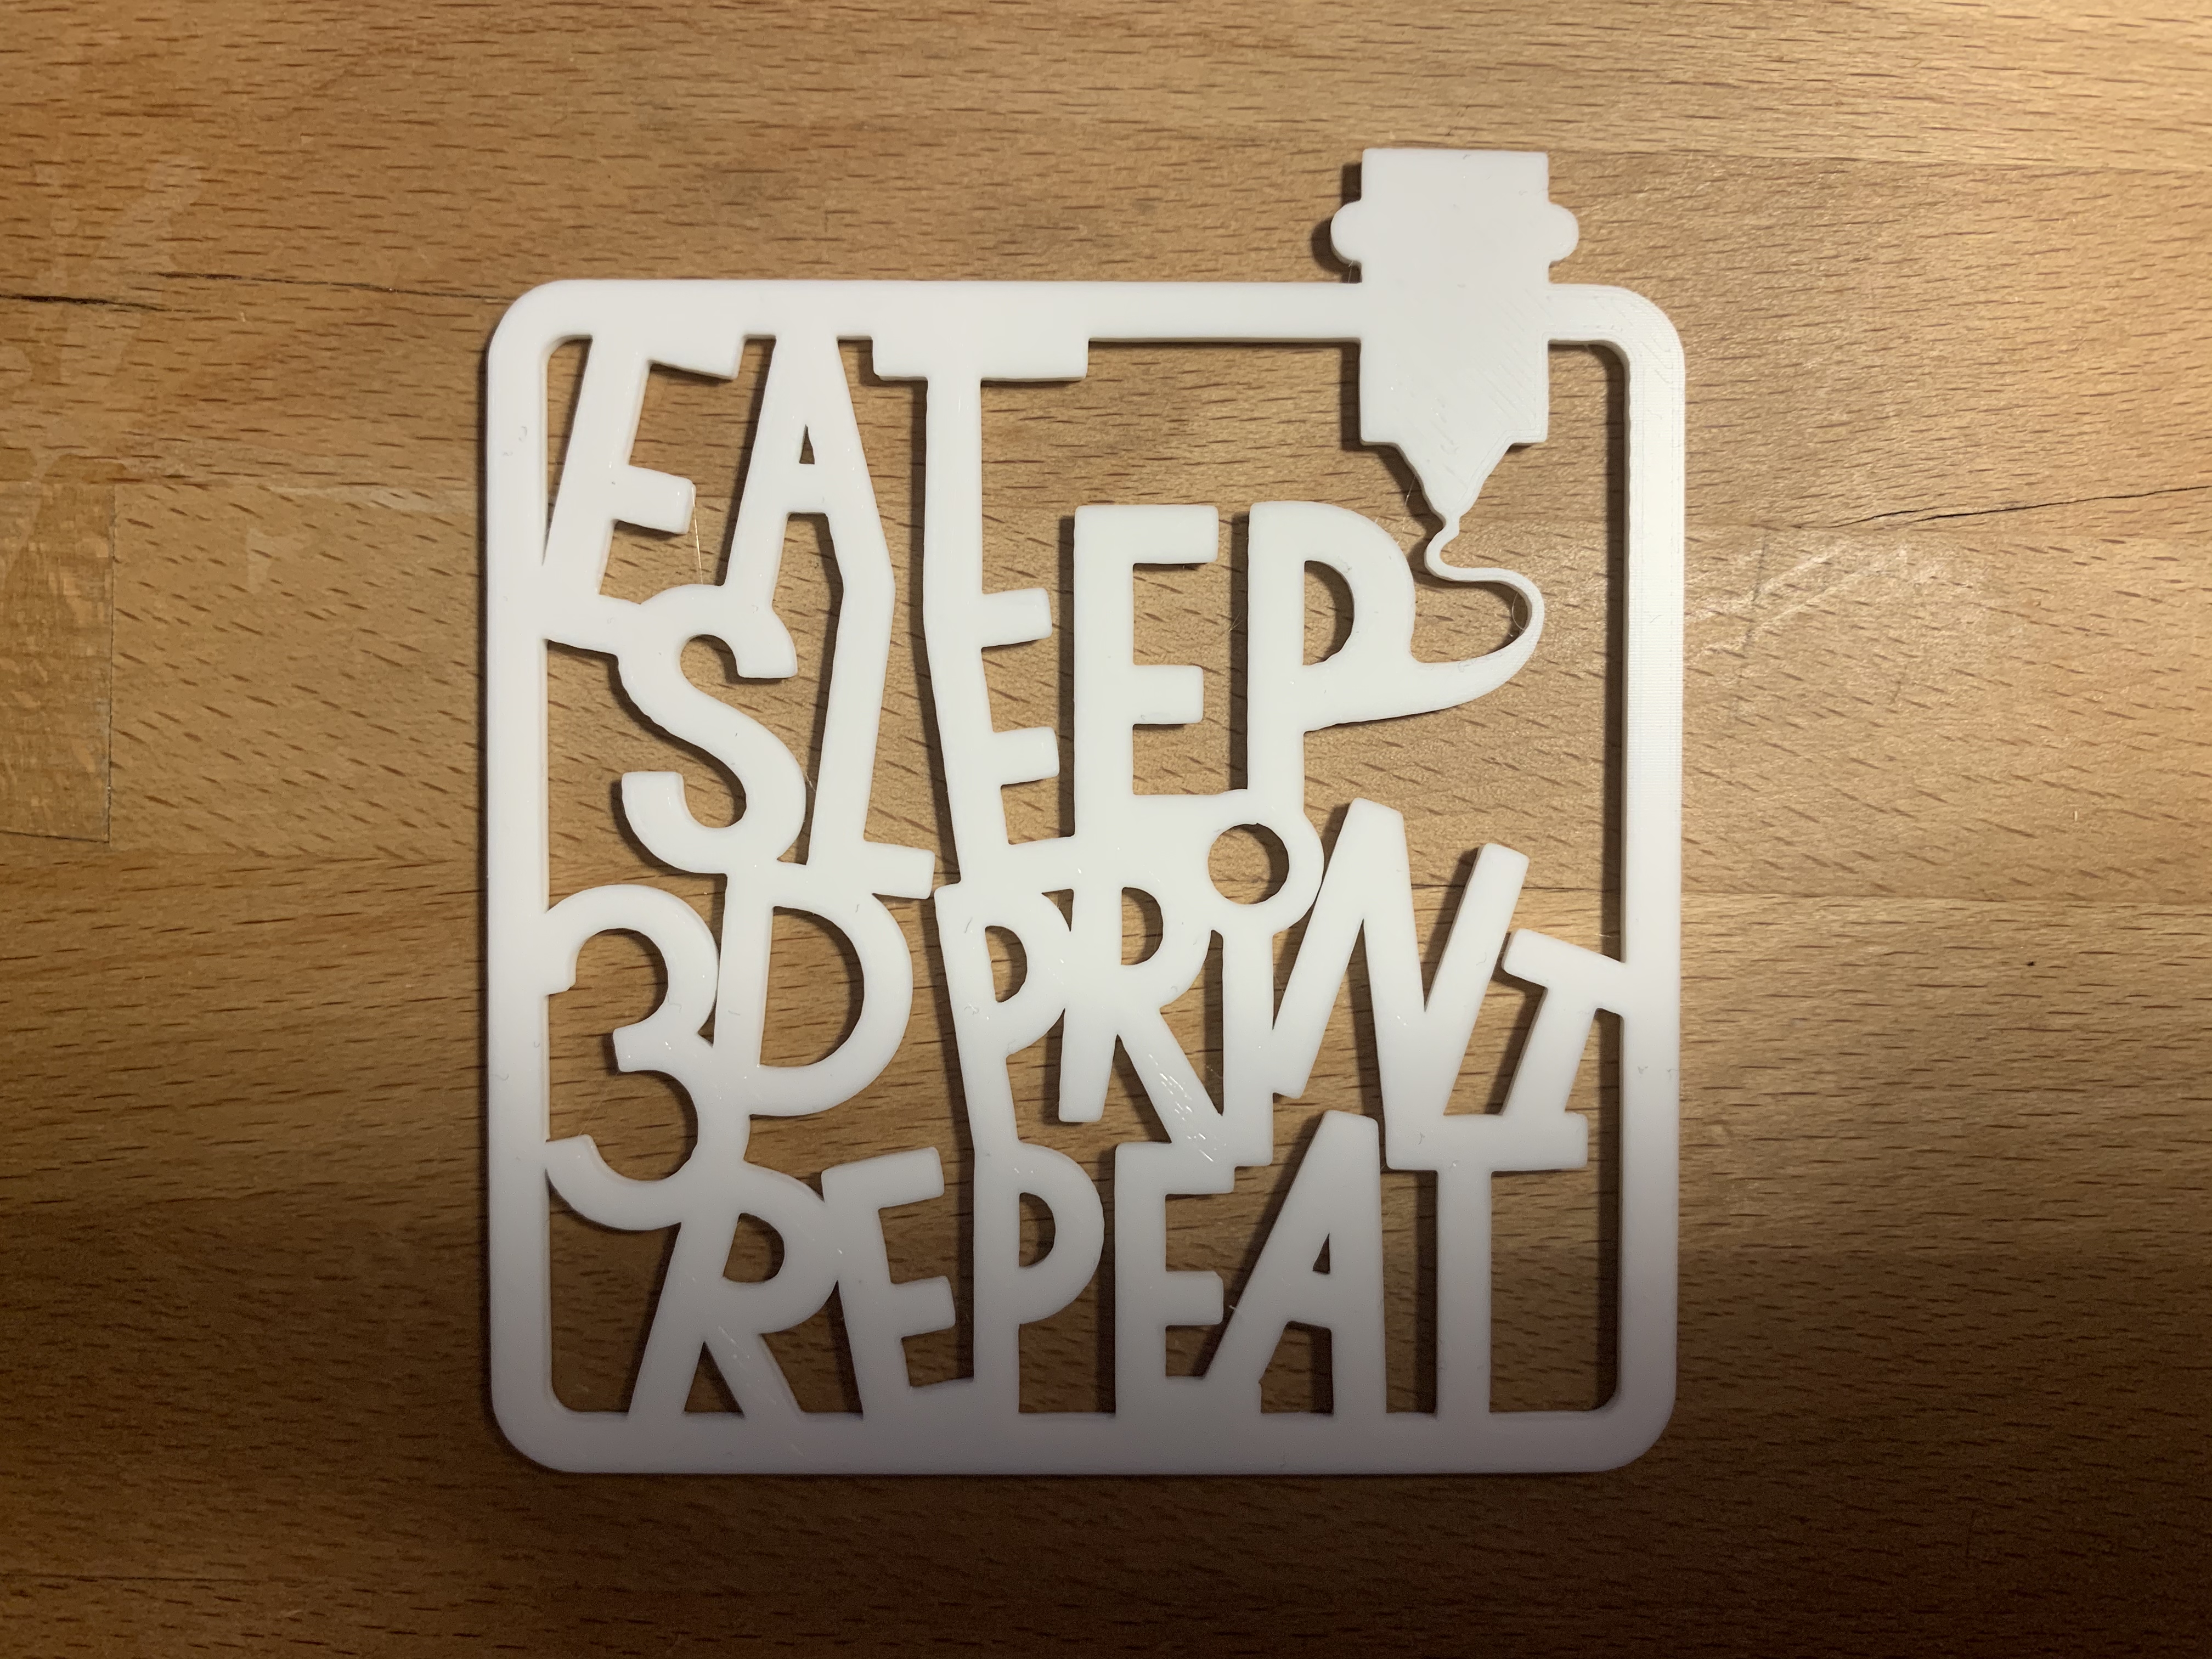 Eat sleep 3D-print repeat coaster for printing-nerds